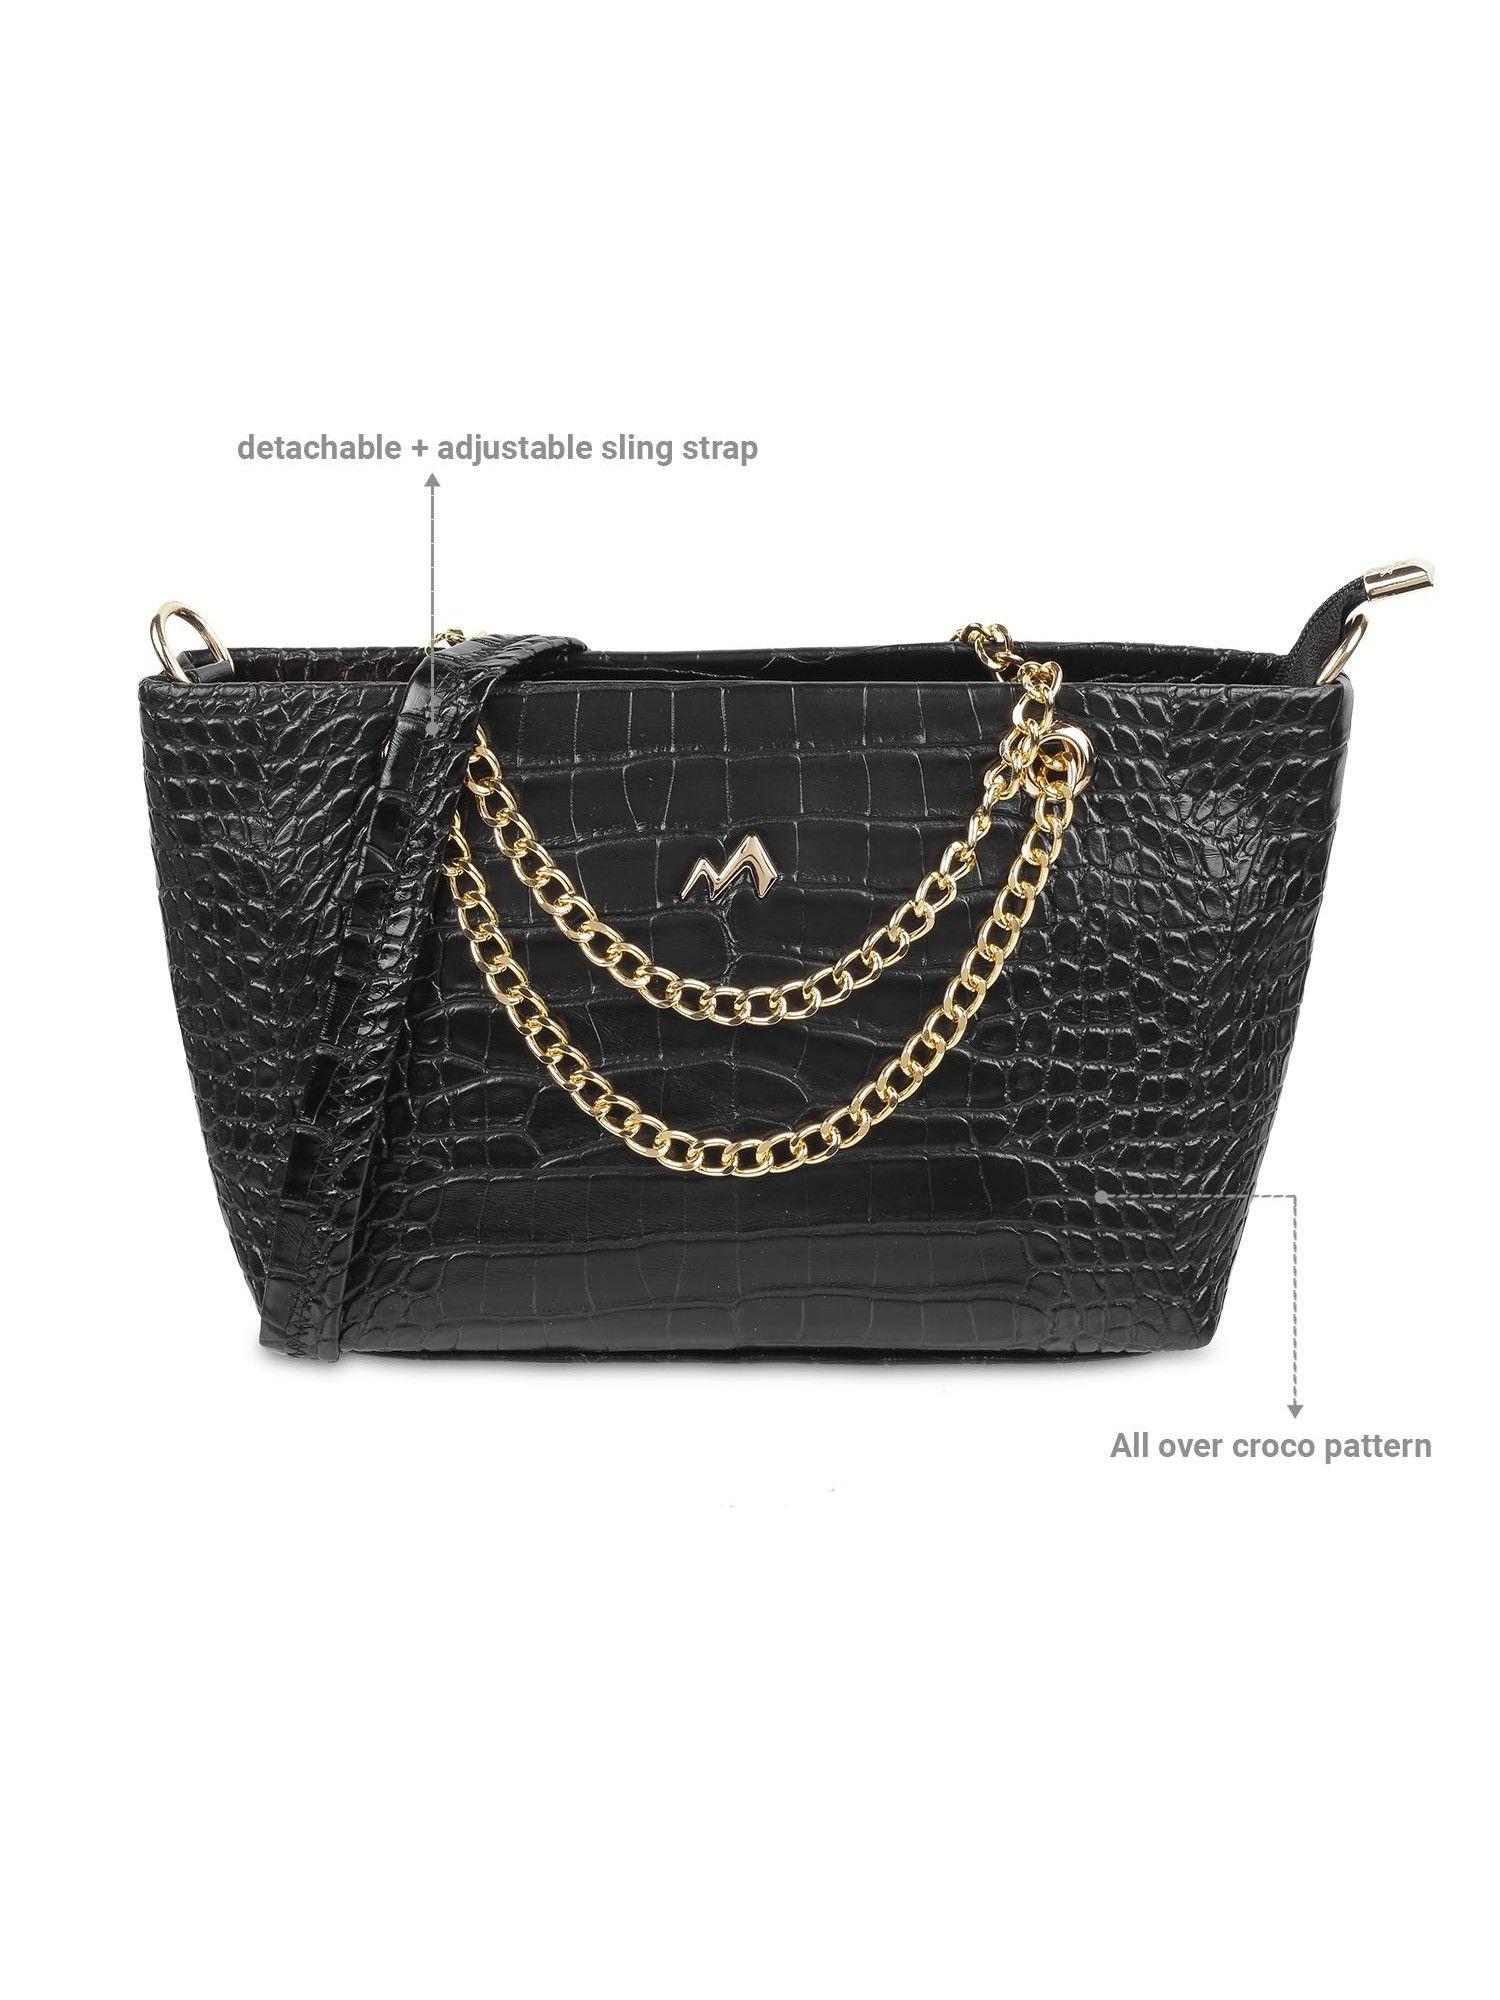 black faux leather zip top sling bag with detachable strap (m)